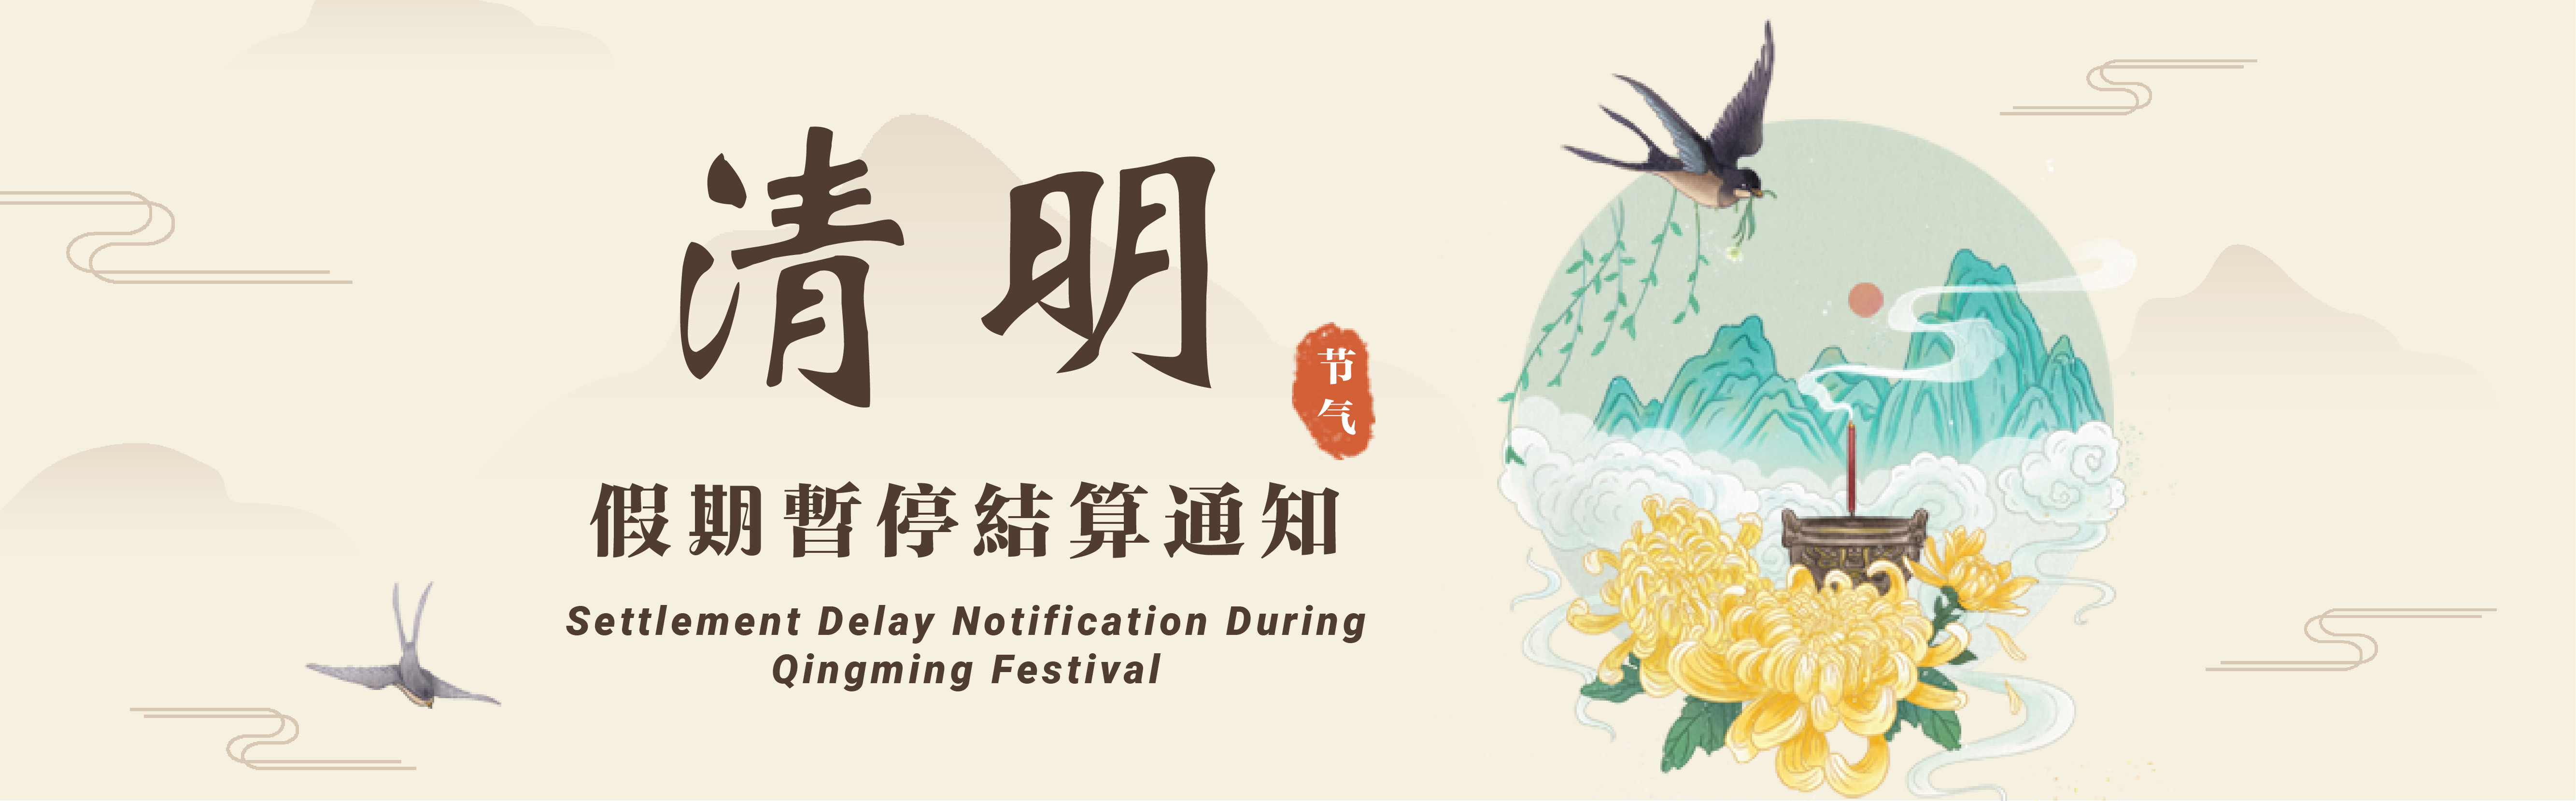 Settlement Delay Notification During Qingming Festival in China 关于2023年中国清明节假期暂停结算的通知